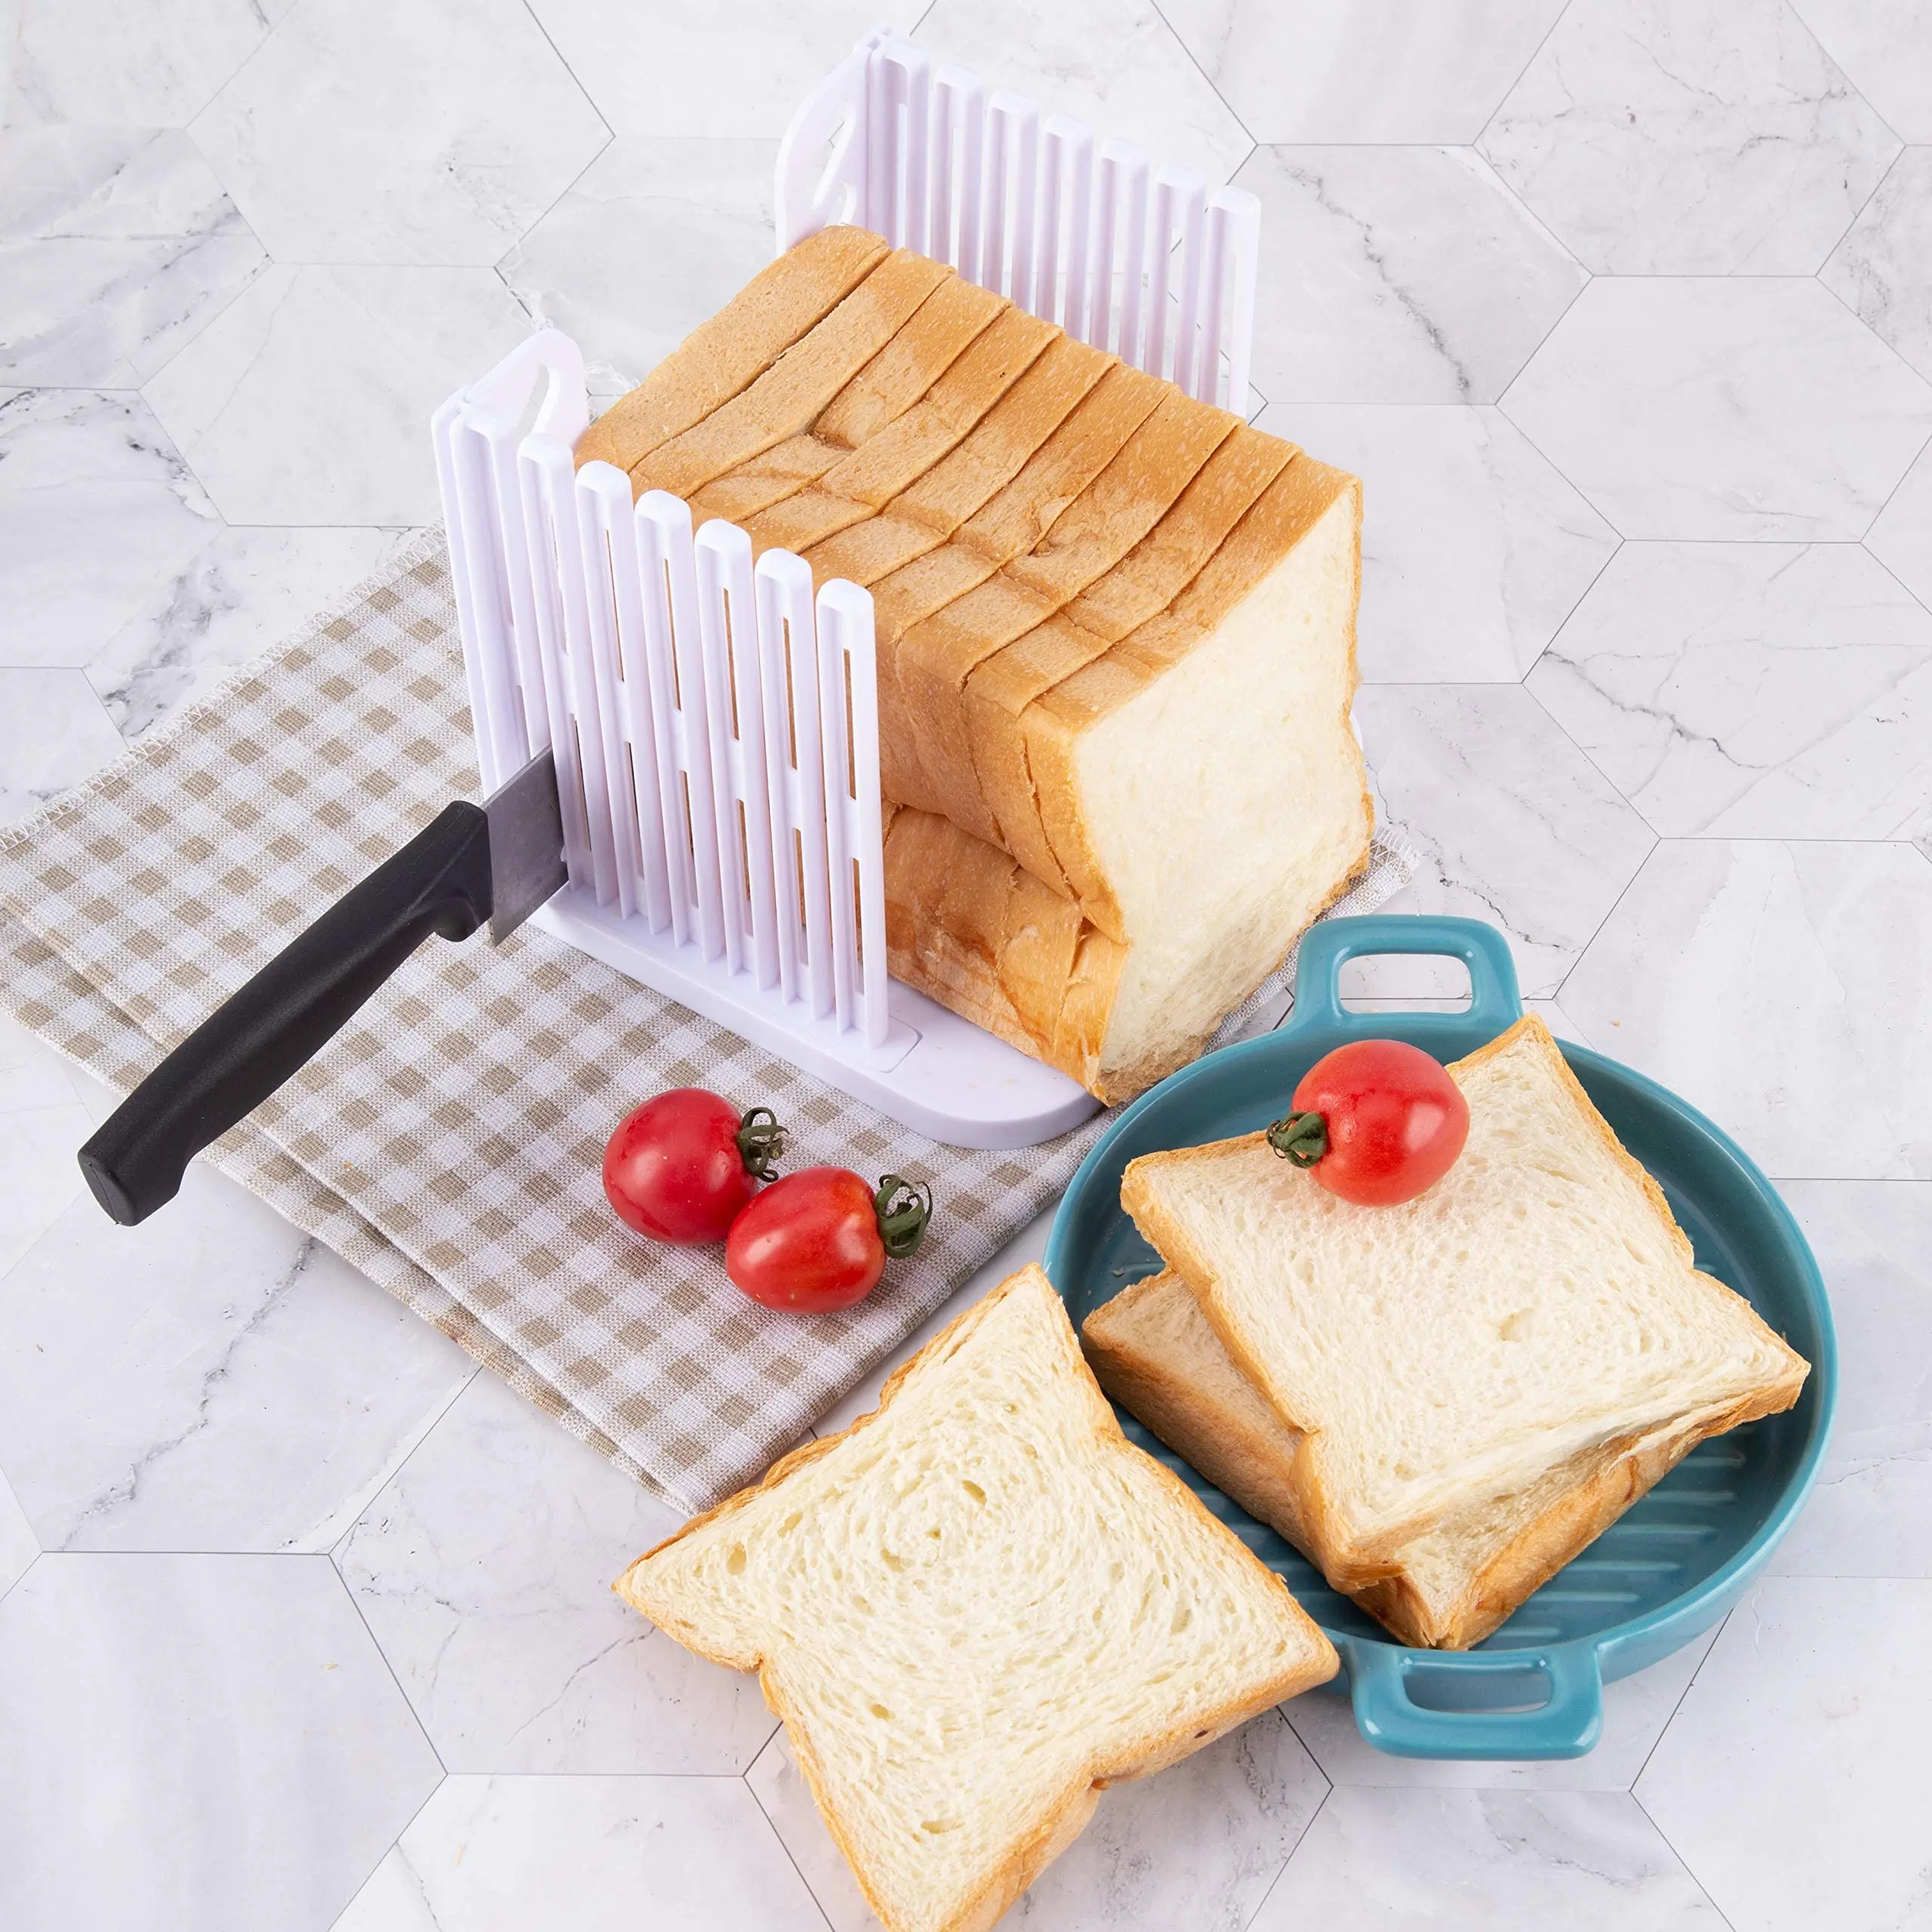 https://ae01.alicdn.com/kf/S12f83aaa7c664246a551a449aacde74cR/Bread-Slicer-Foldable-Toast-Slicing-Guide-Manual-Adjustable-Machine-Cake-Sandwich-Loaf-Bagel-Cutter-Kitchen-Accessories.jpg